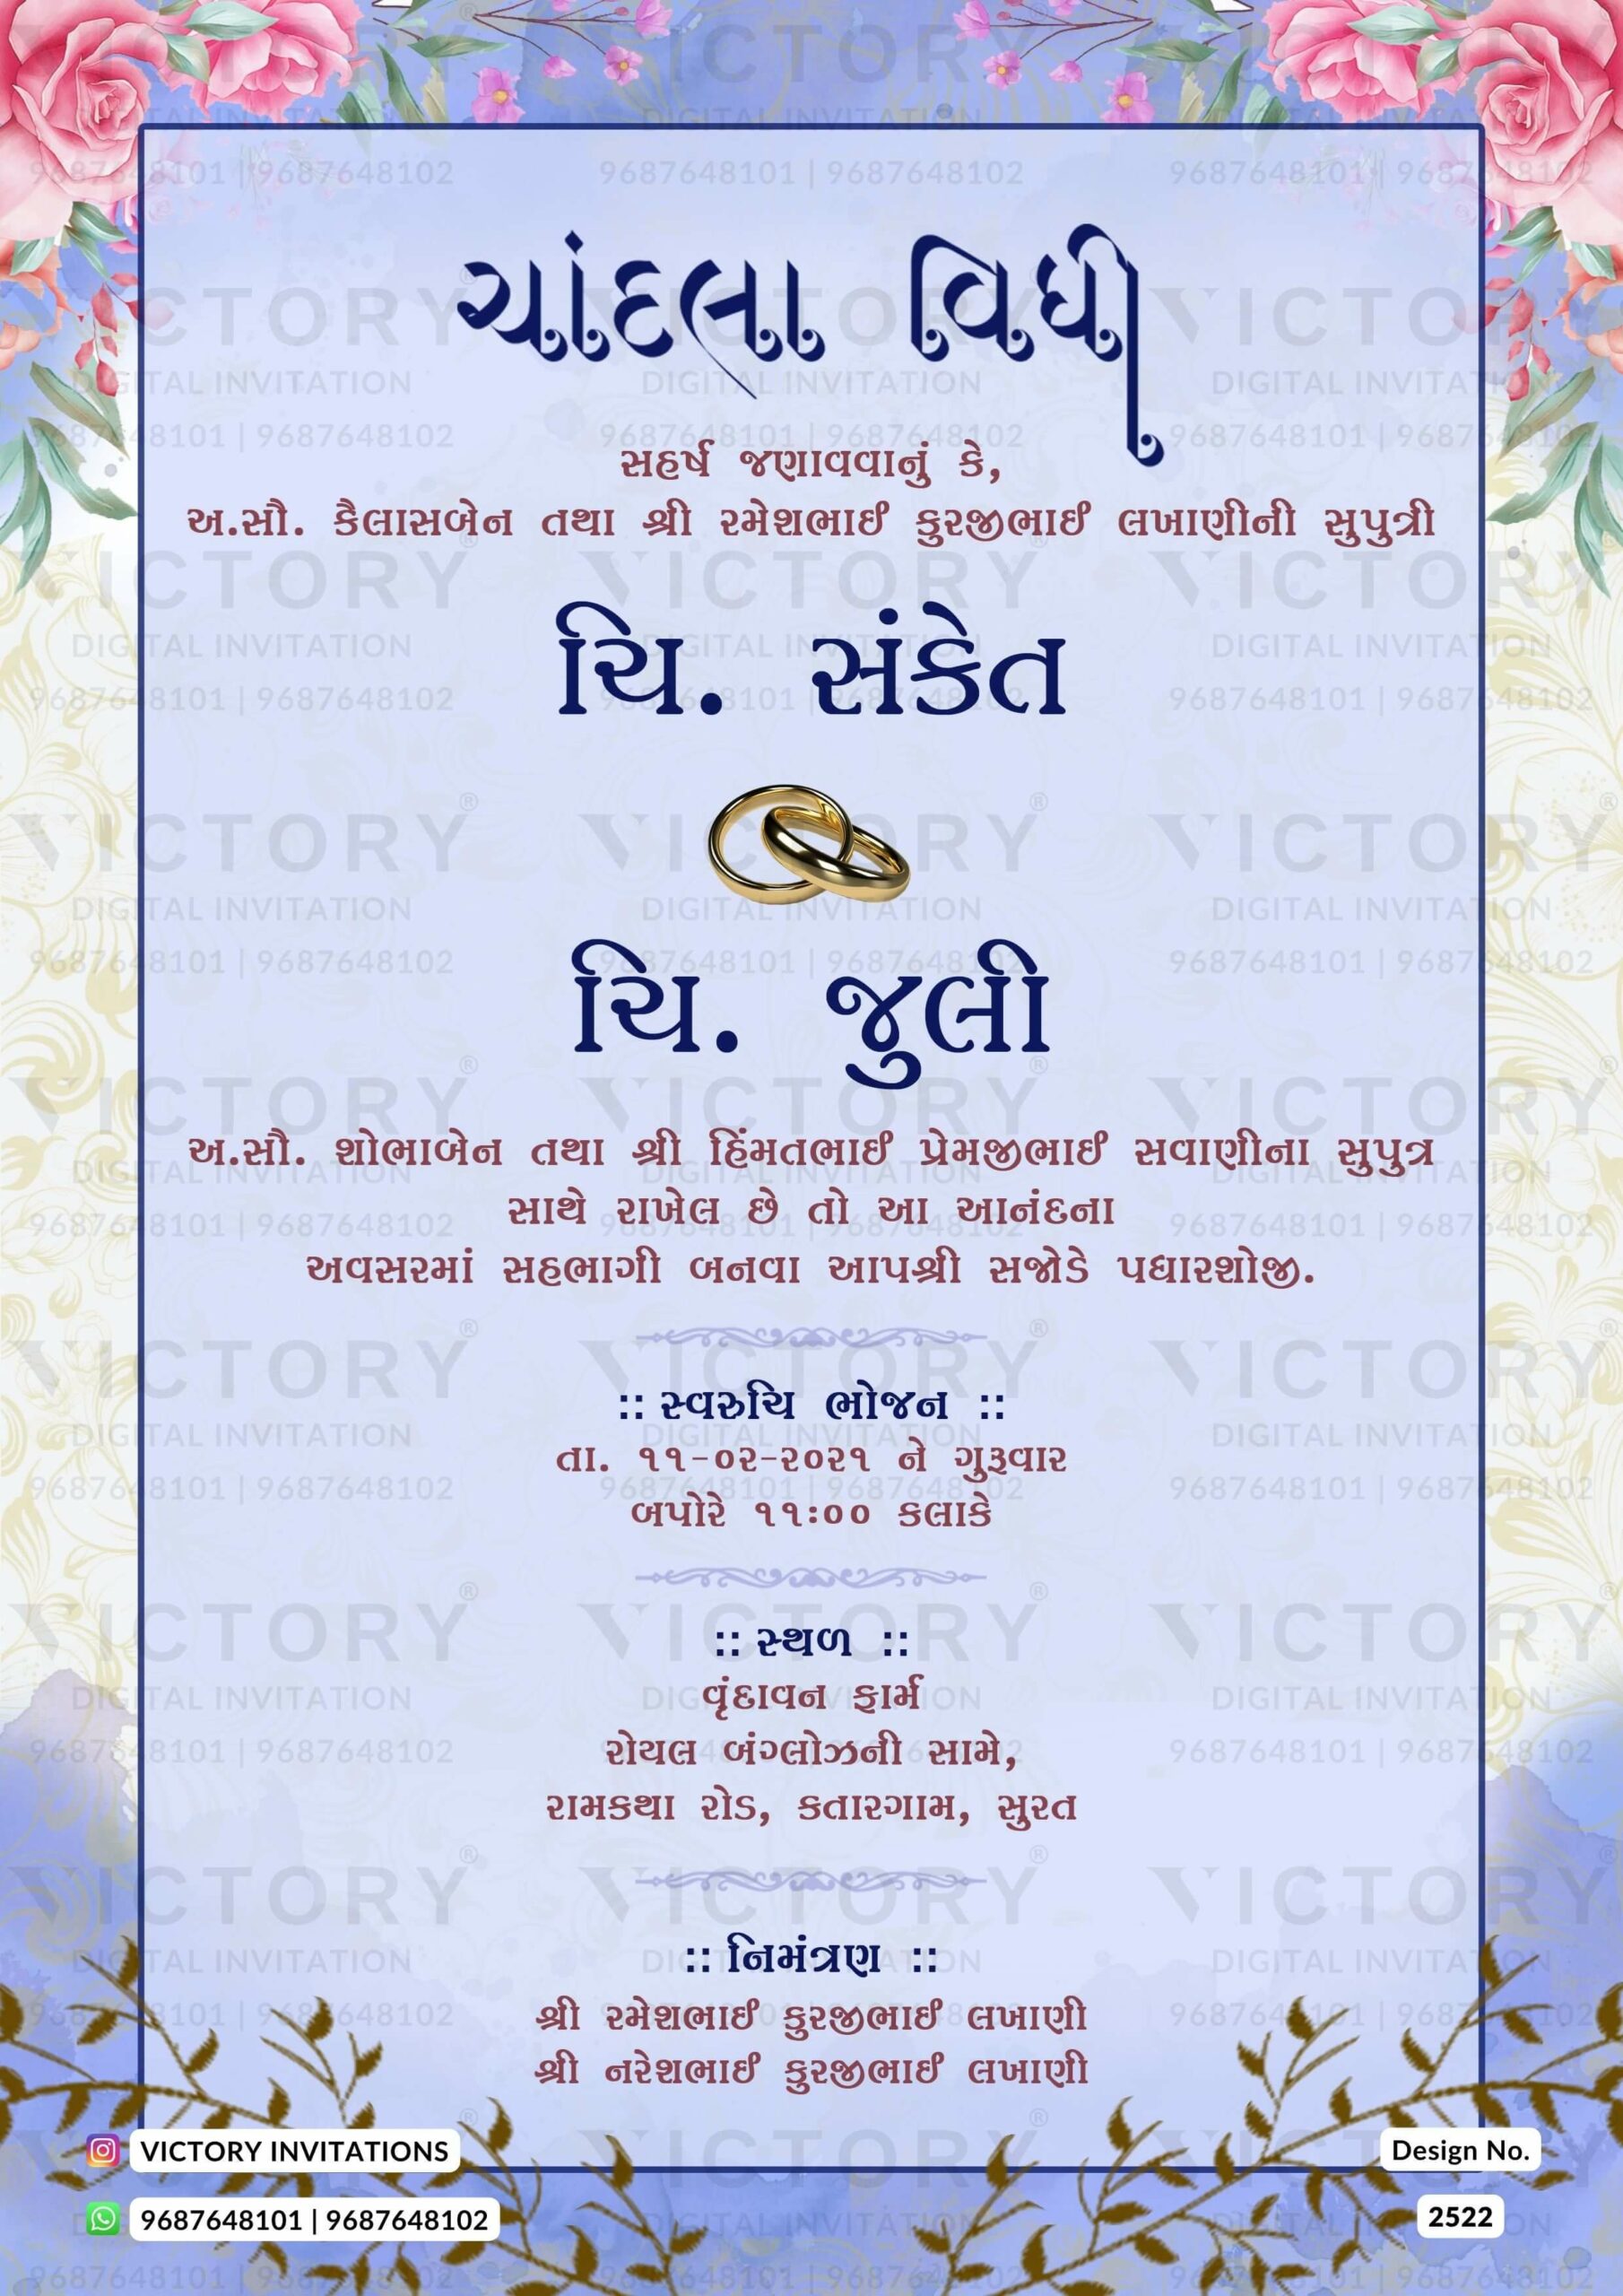 blue color floral theme digital engagement invitation card in Gujarati language design 2522